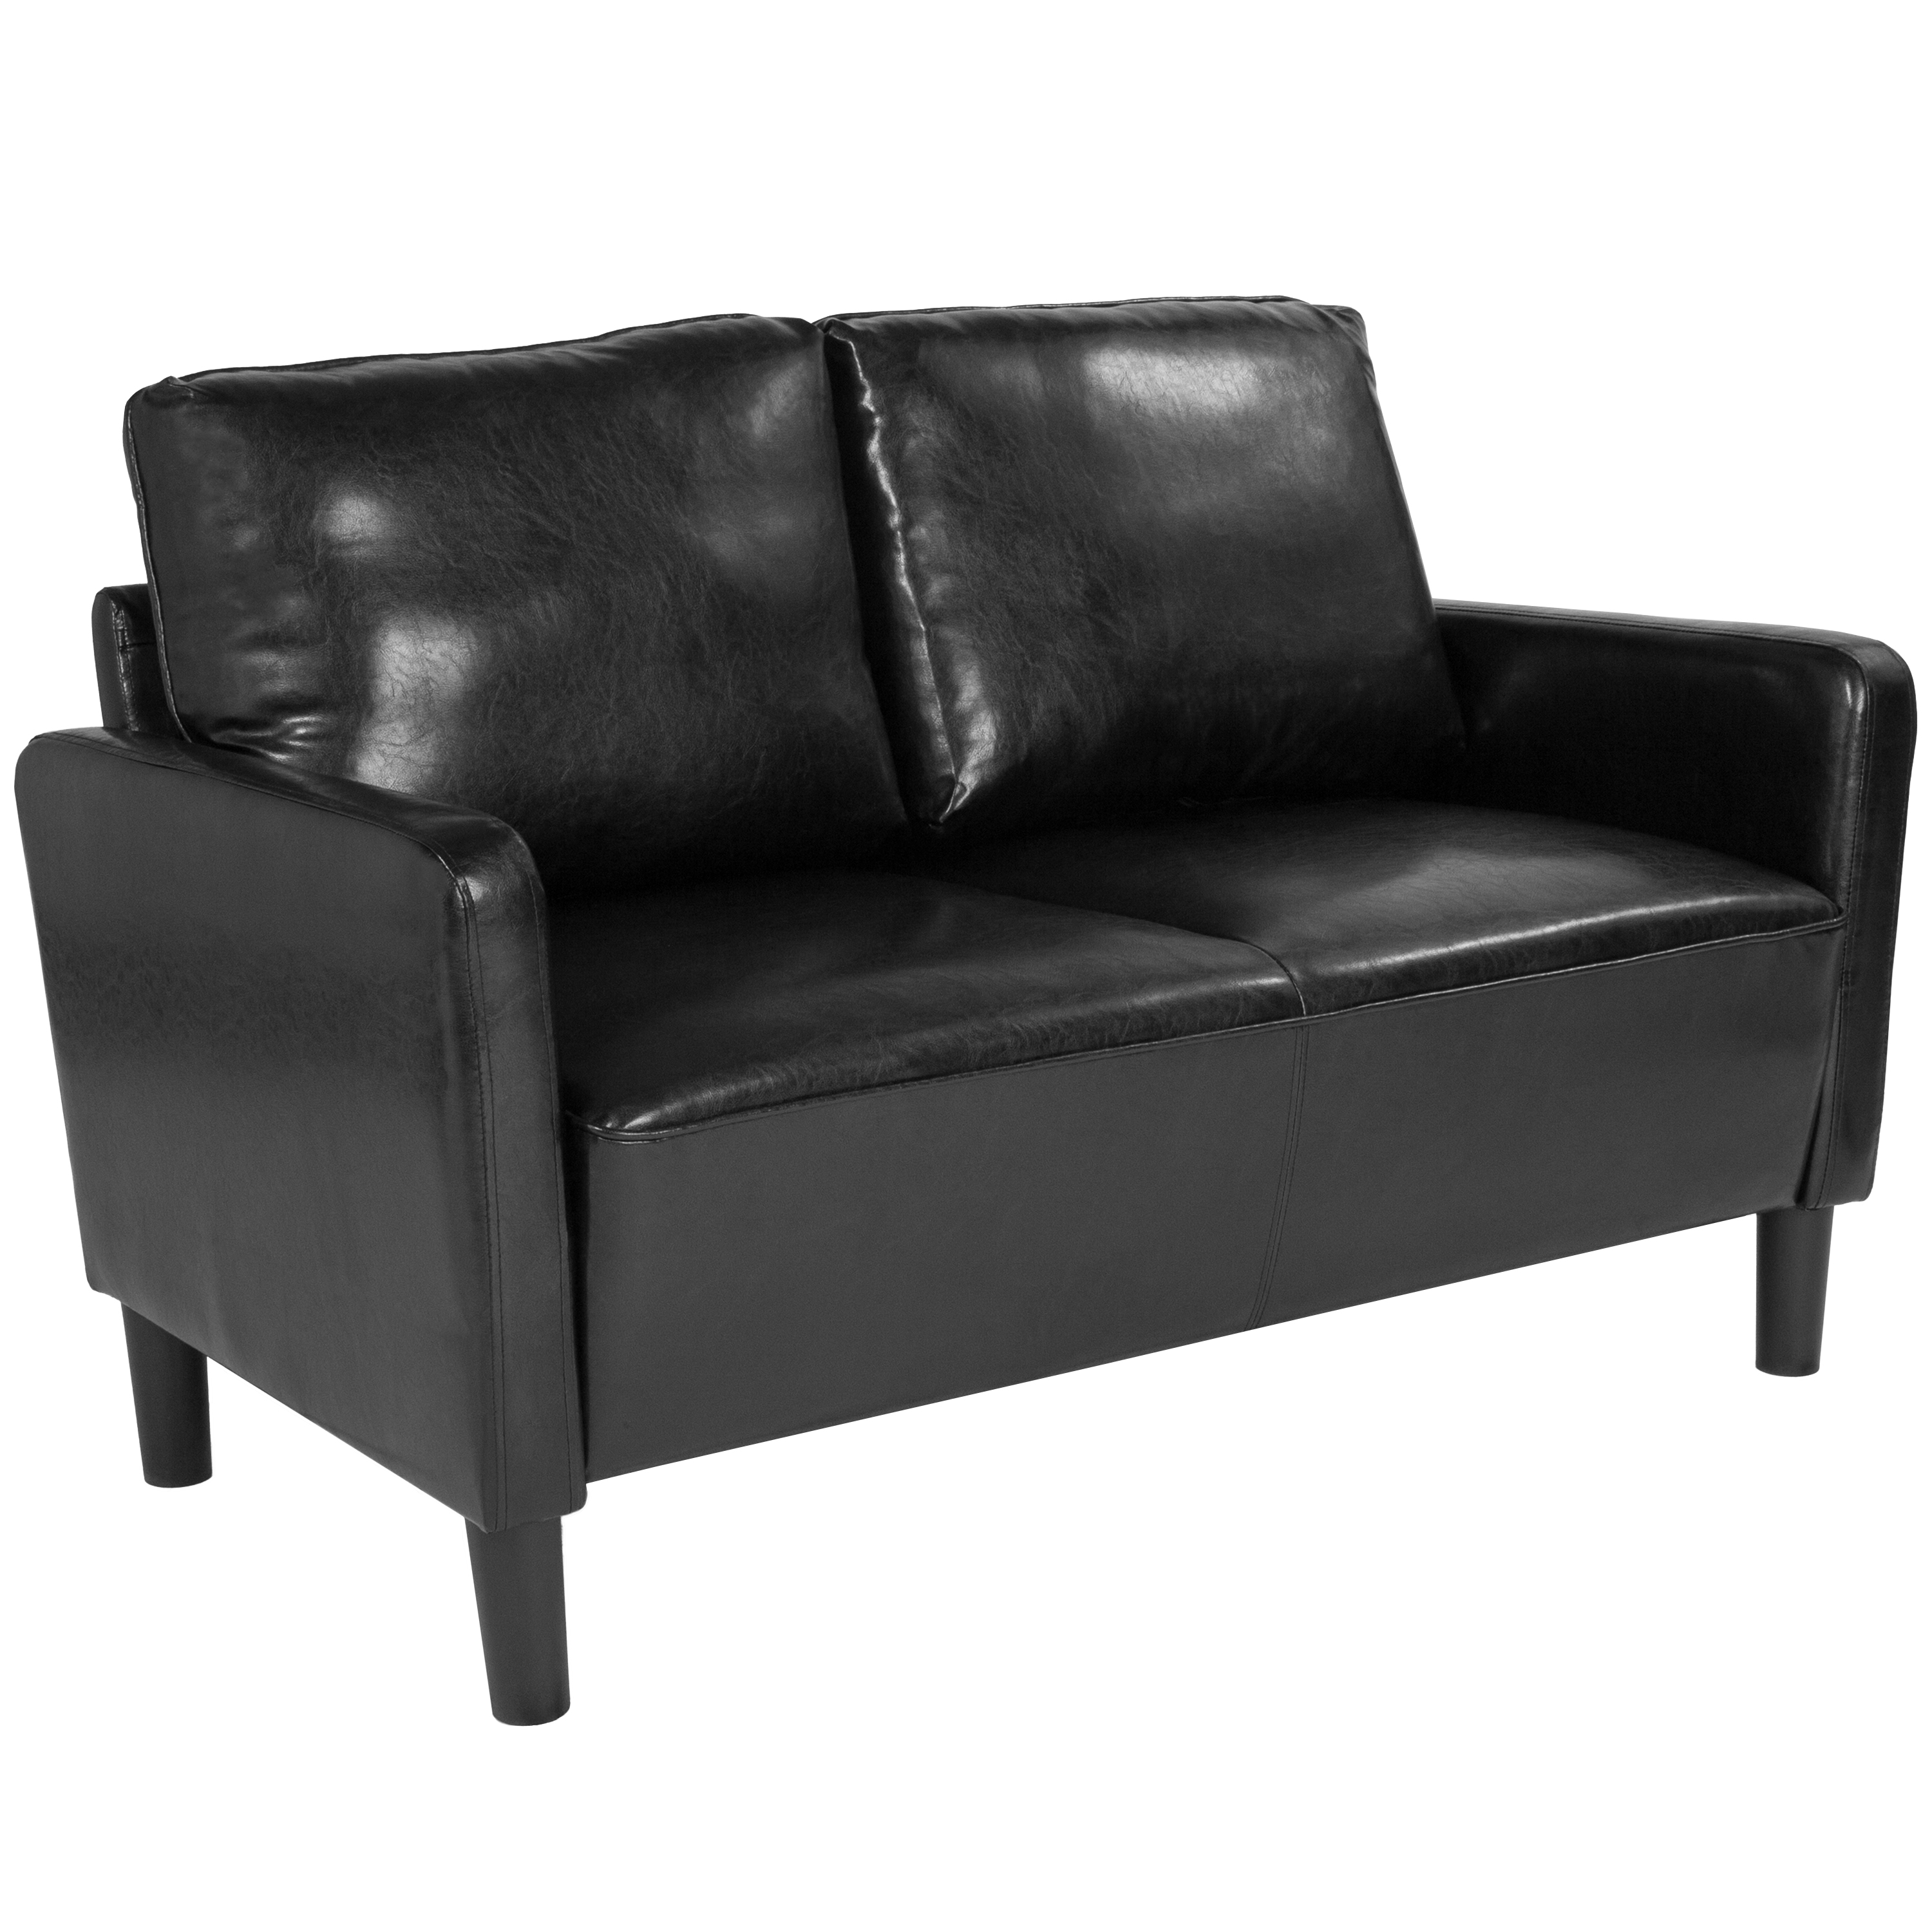 Flash Furniture Washington Park Upholstered Loveseat in Black LeatherSoft - image 1 of 5